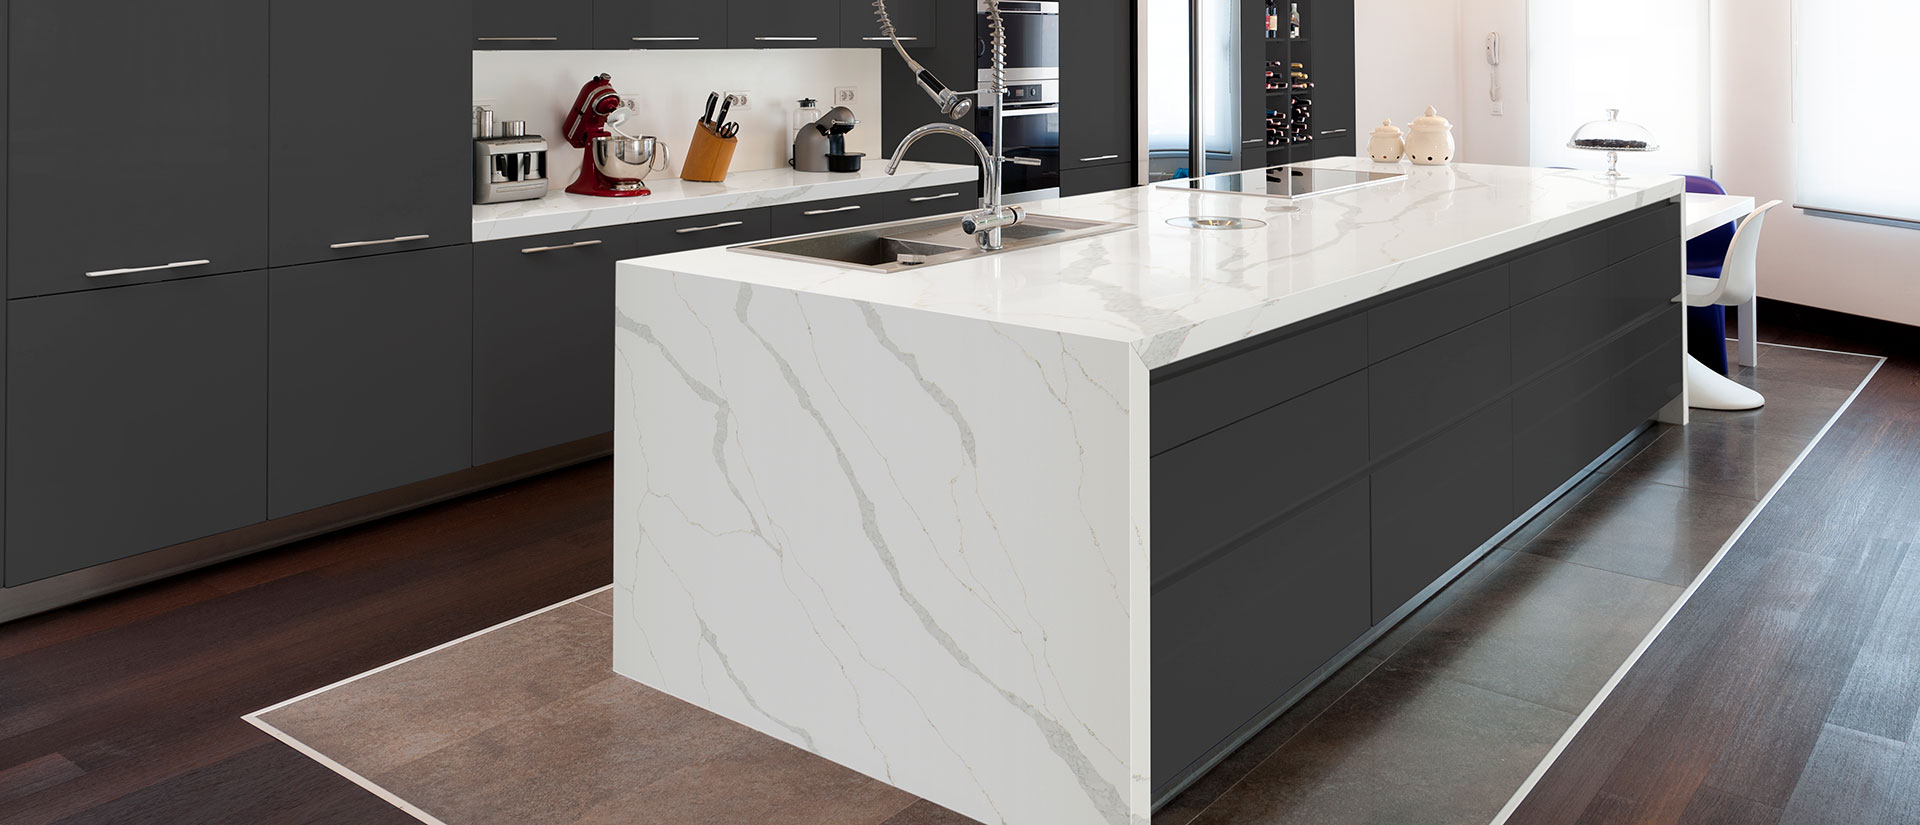 Calacatta Izaro quartz countertop in a luxurious kitchen with golden accents